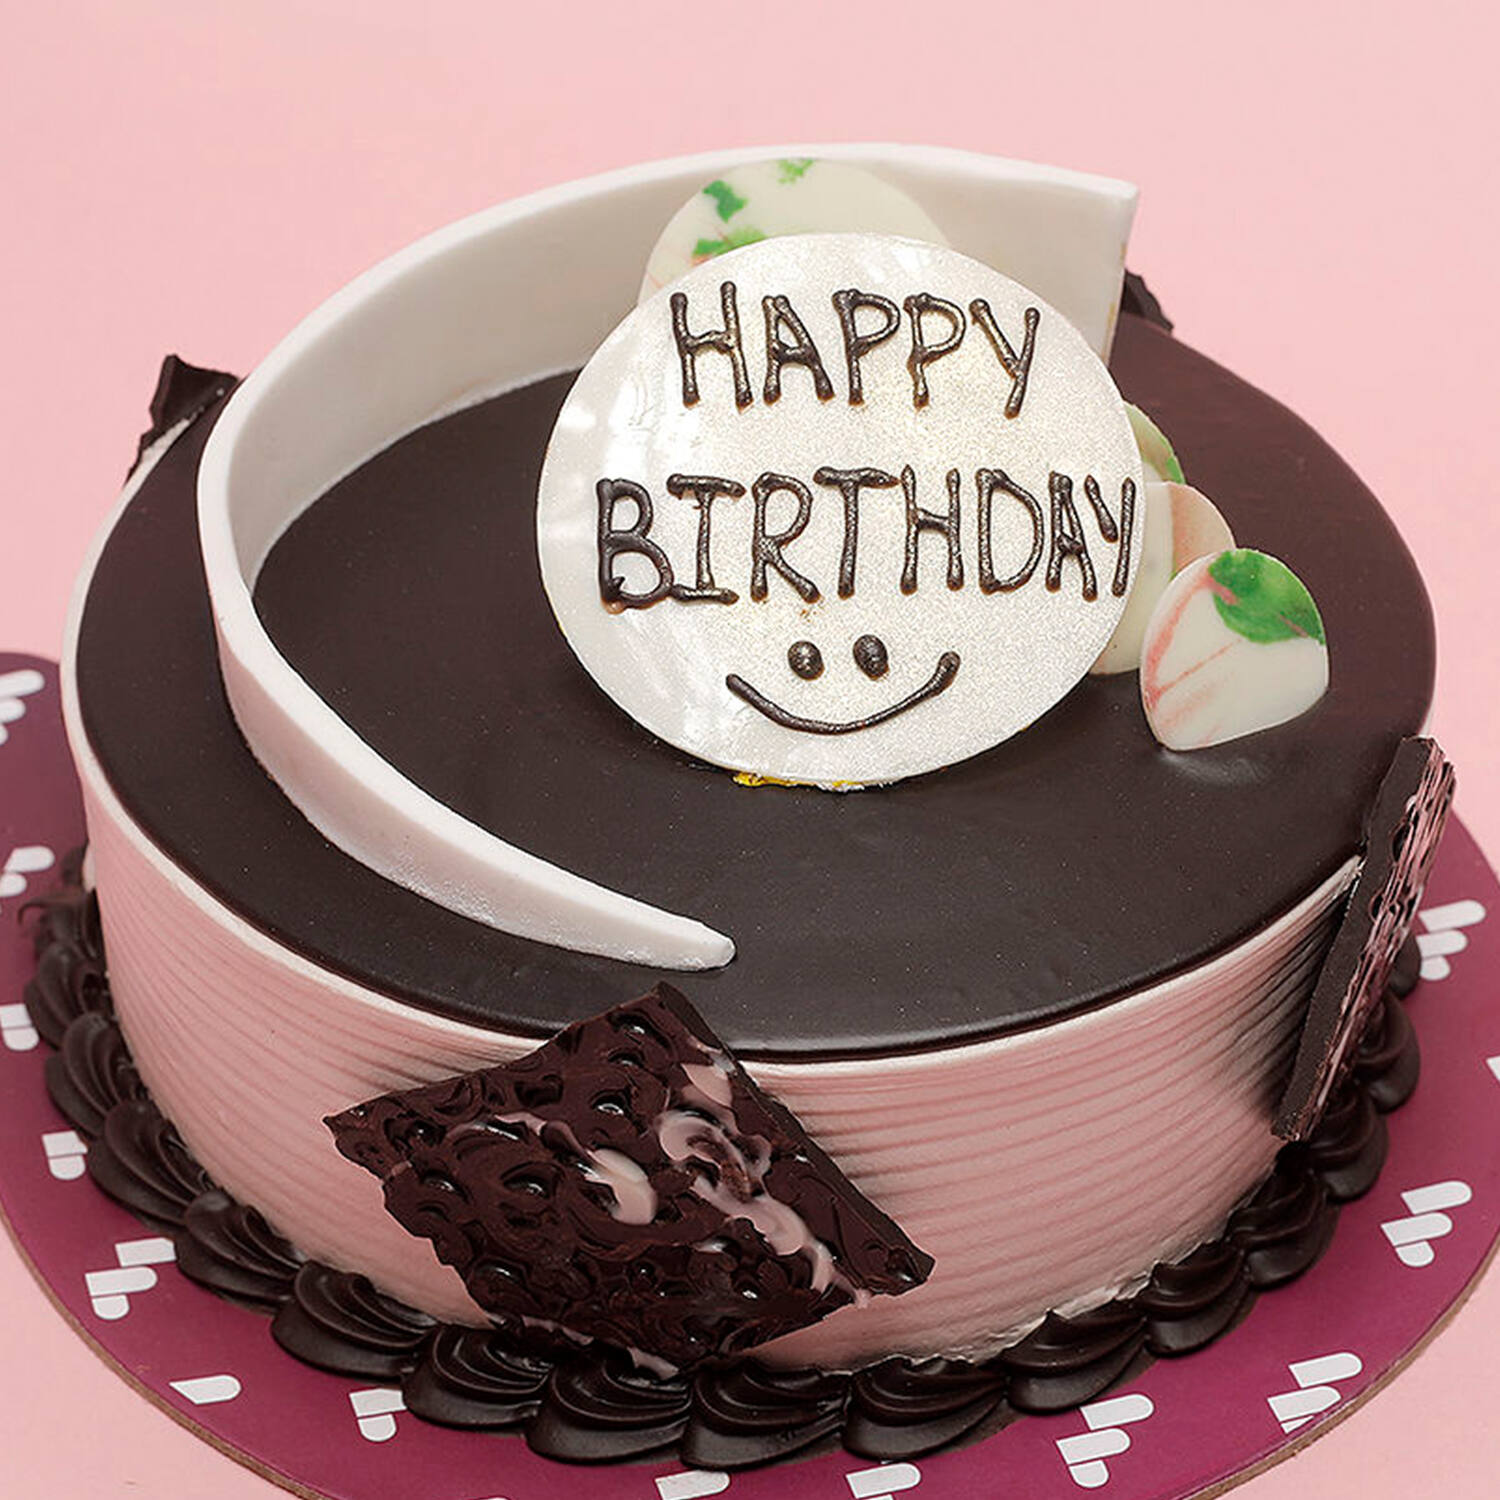 Send Chocolate Birthday Cake Online with Winni